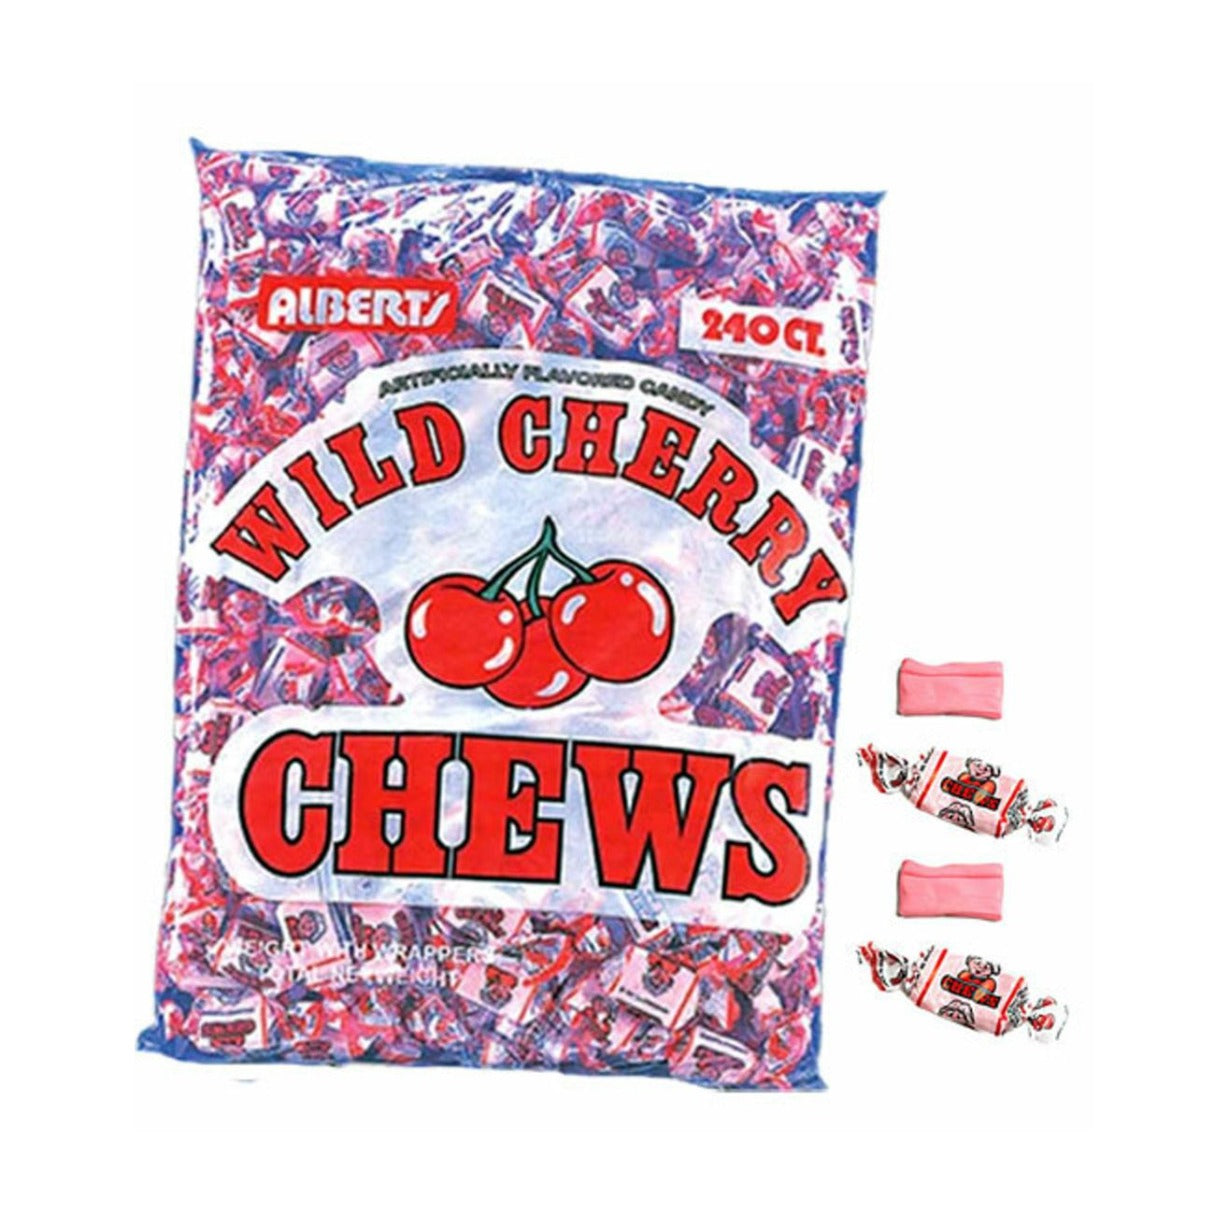 Albert's Wild Cherry Chews Candy 21.2oz - 3ct